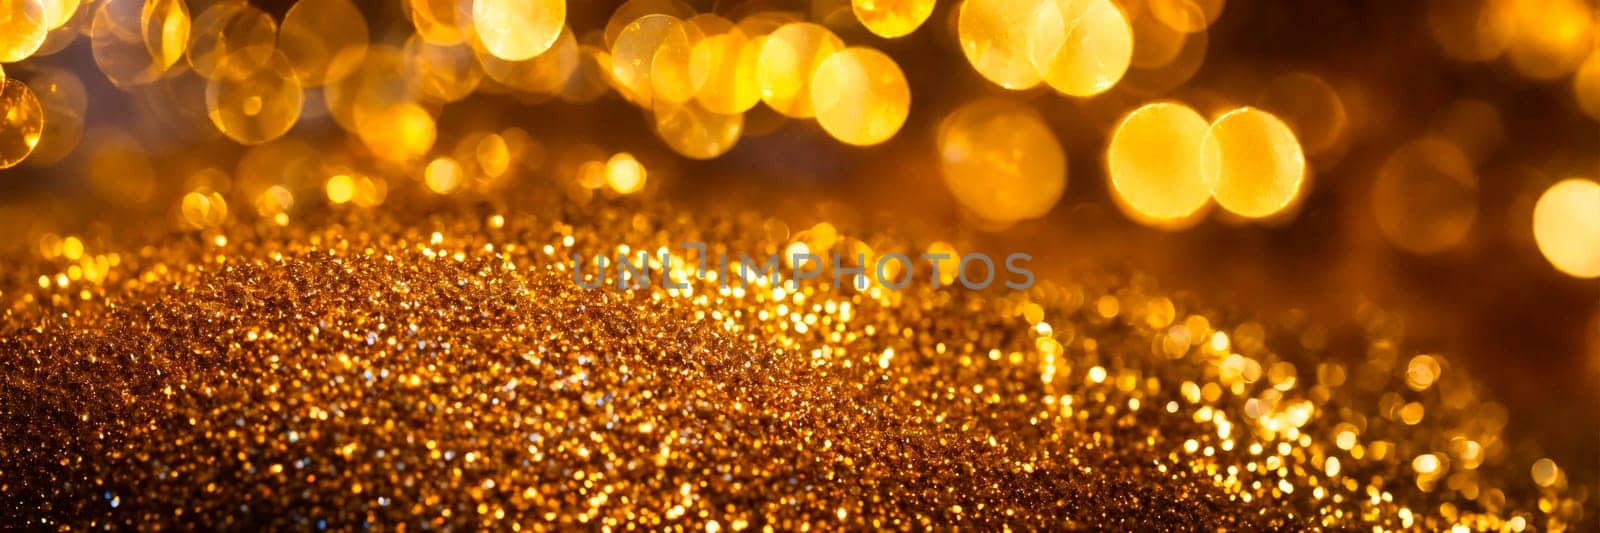 precious stones rings gold. Selective focus. by yanadjana